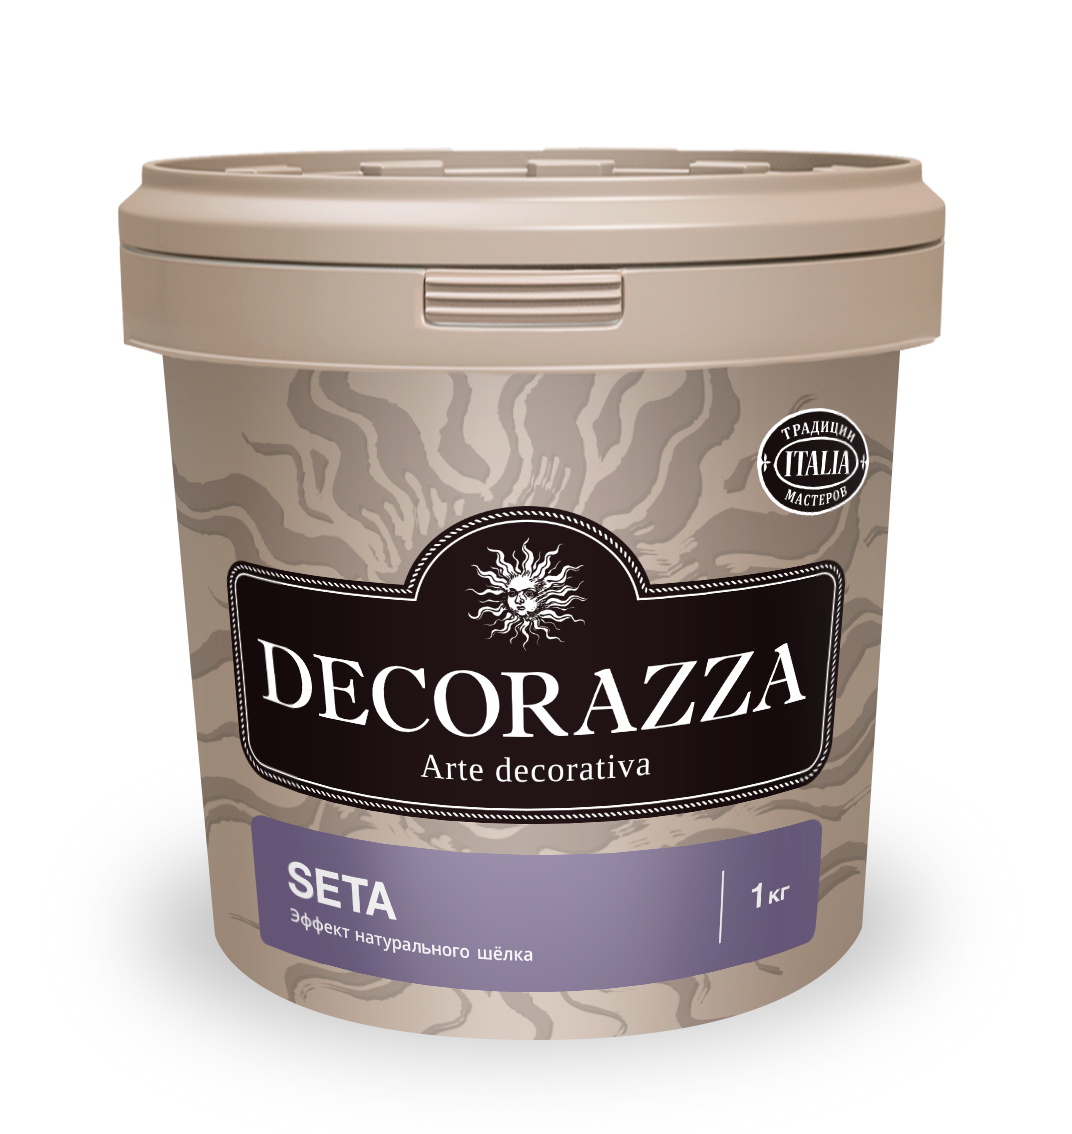 Декоративная штукатурка эффект натурального шелка Decorazza Seta, ST 800, золото, 1 кг декоративная фактурная штукатурка decorazza